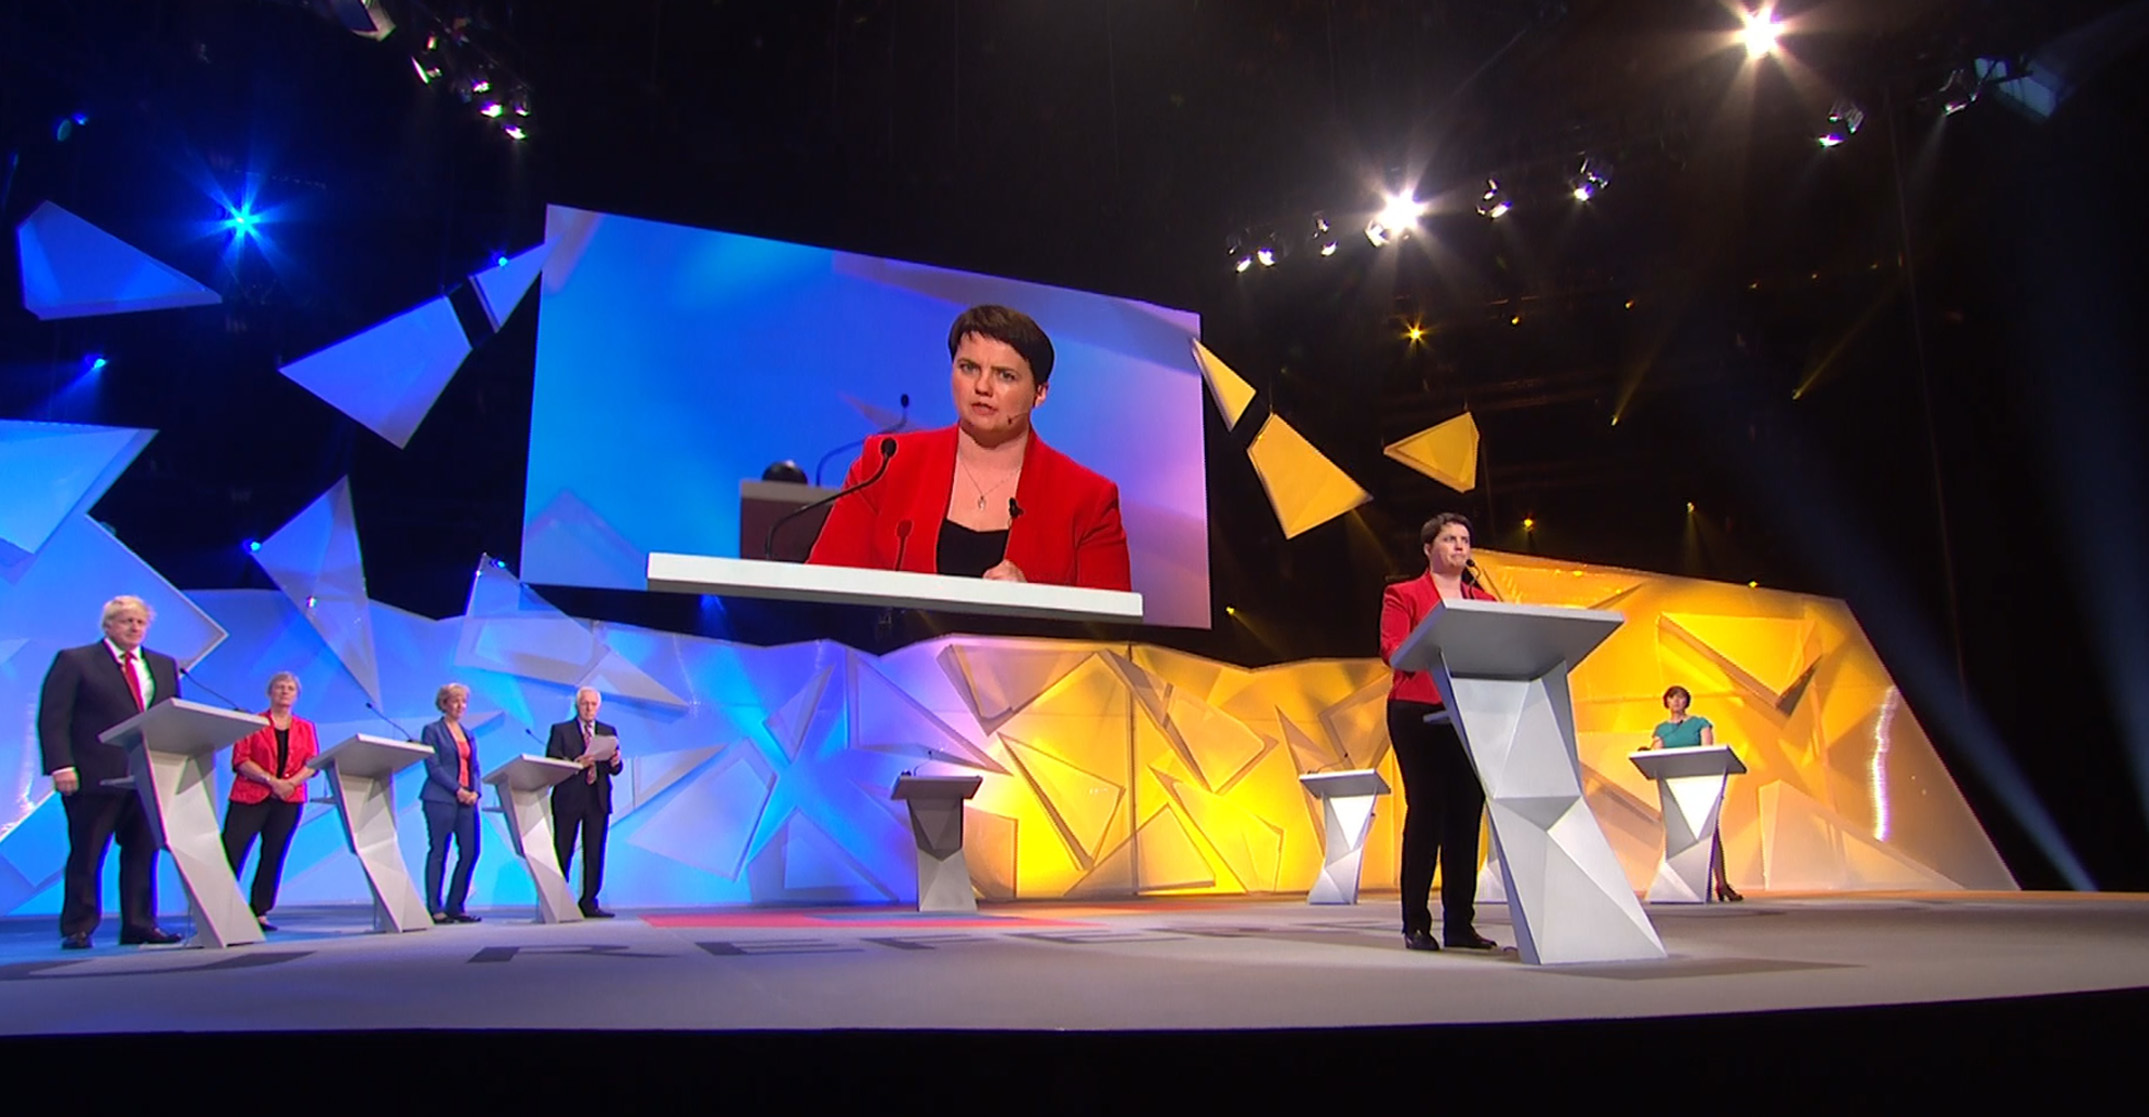 Scottish Conservative leader Ruth Davidson makes her final speech during the BBC's EU debate.